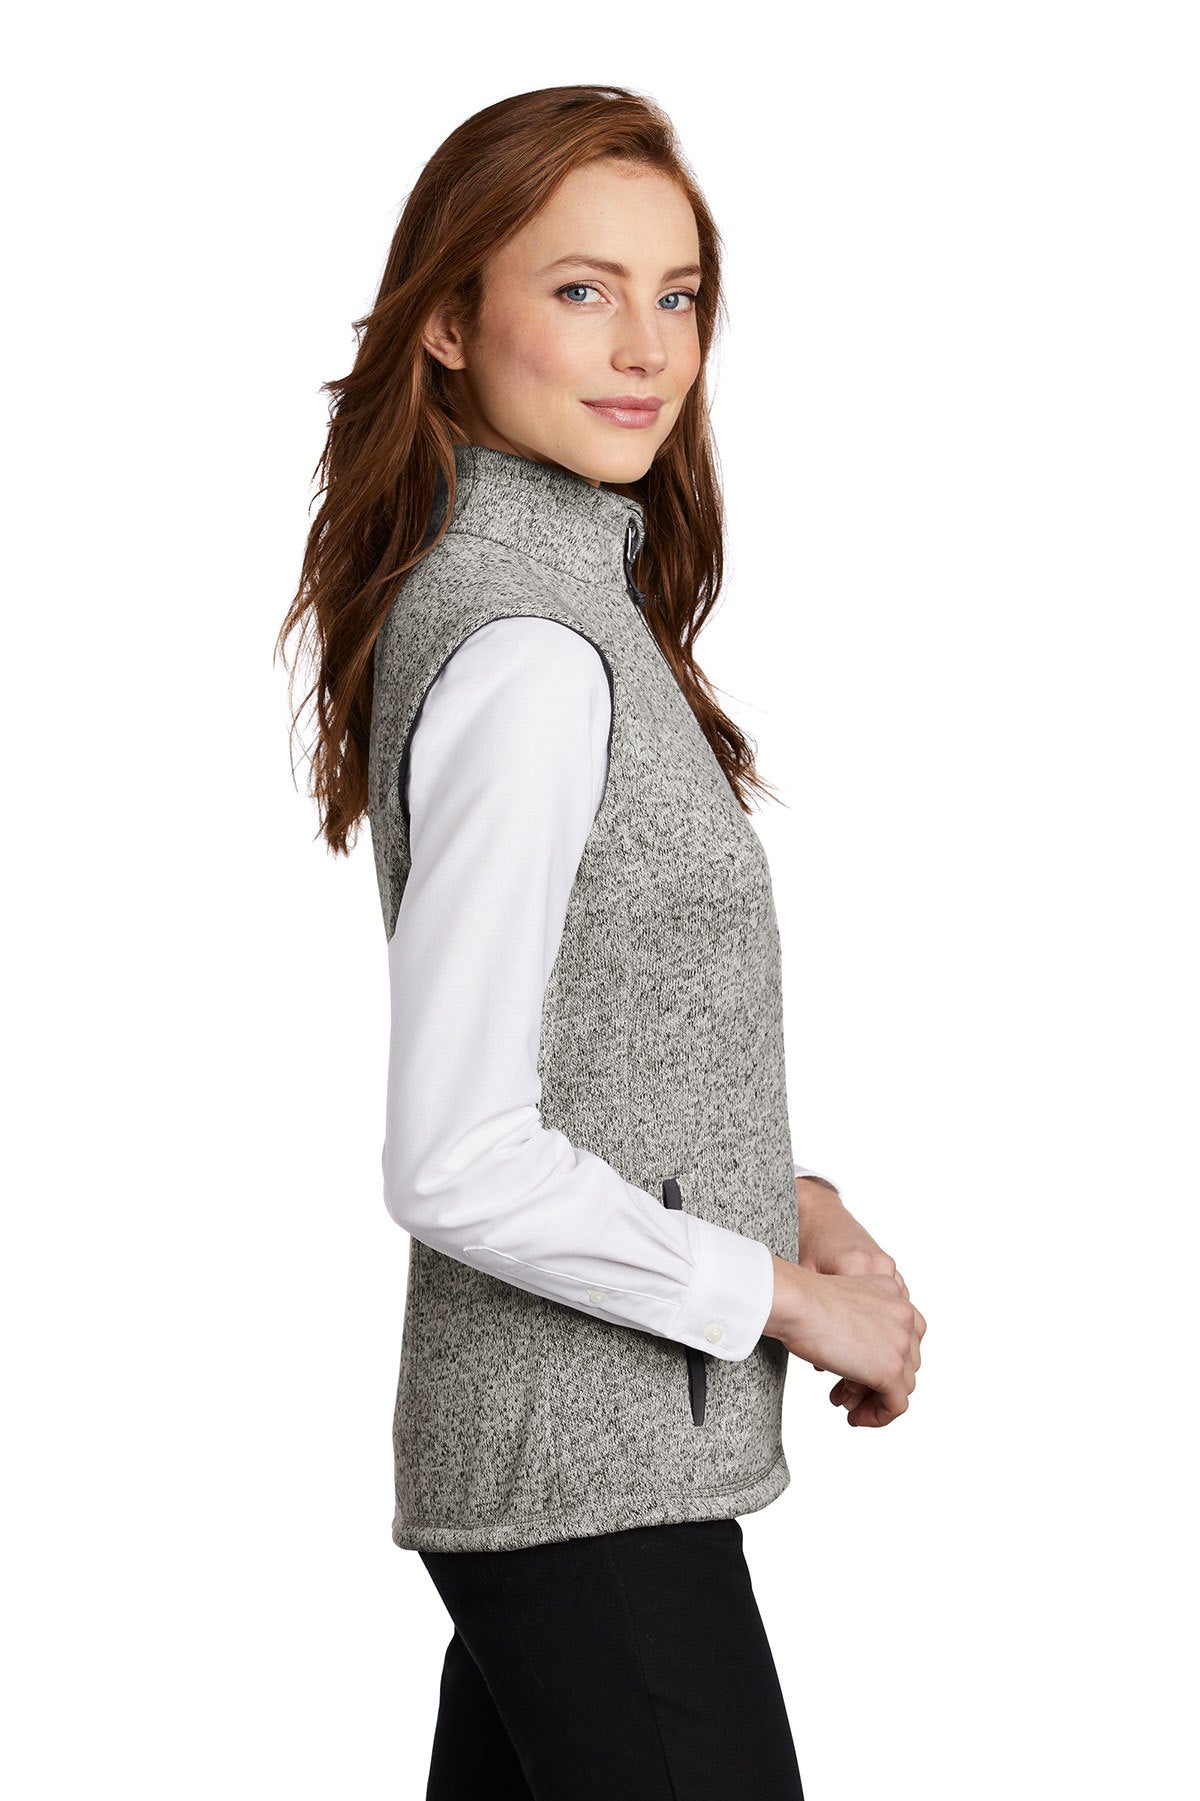 Branded Port Authority Ladies Sweater Fleece Vest Grey Heather